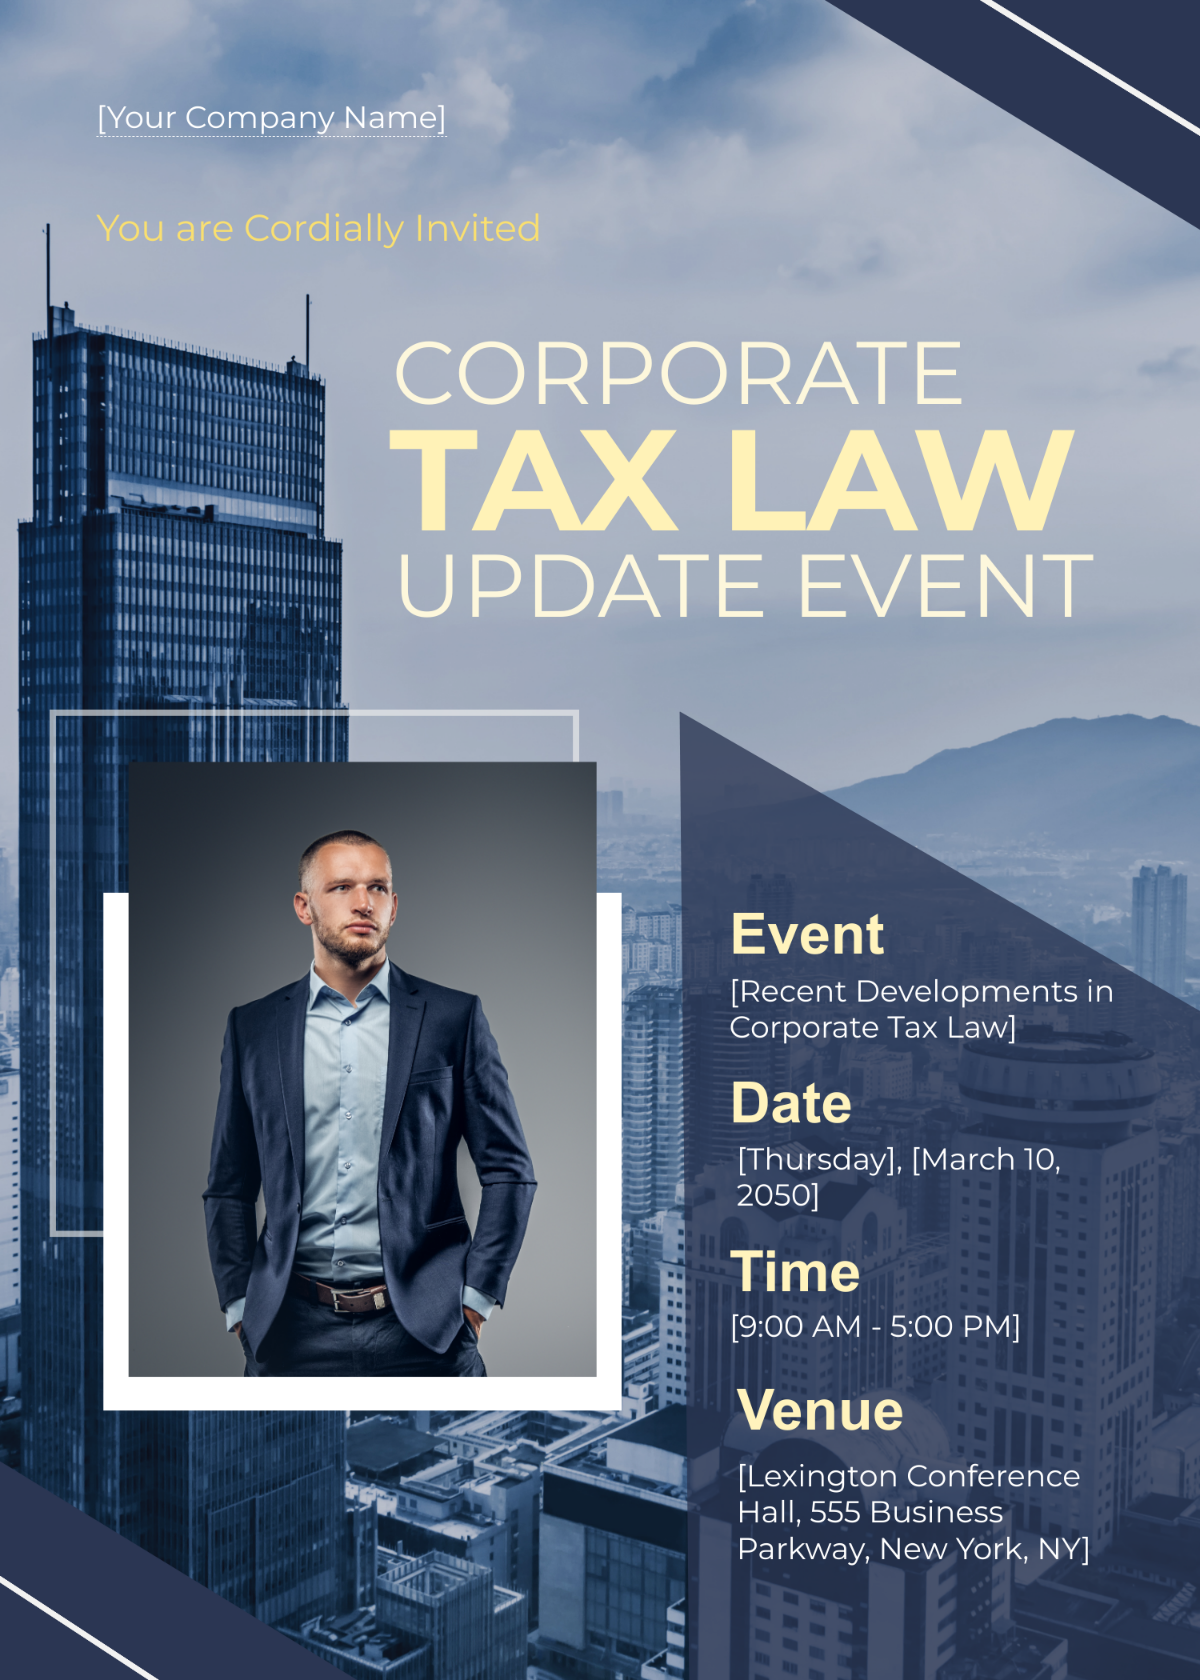 Corporate Tax Law Update Event Invitation Card Template